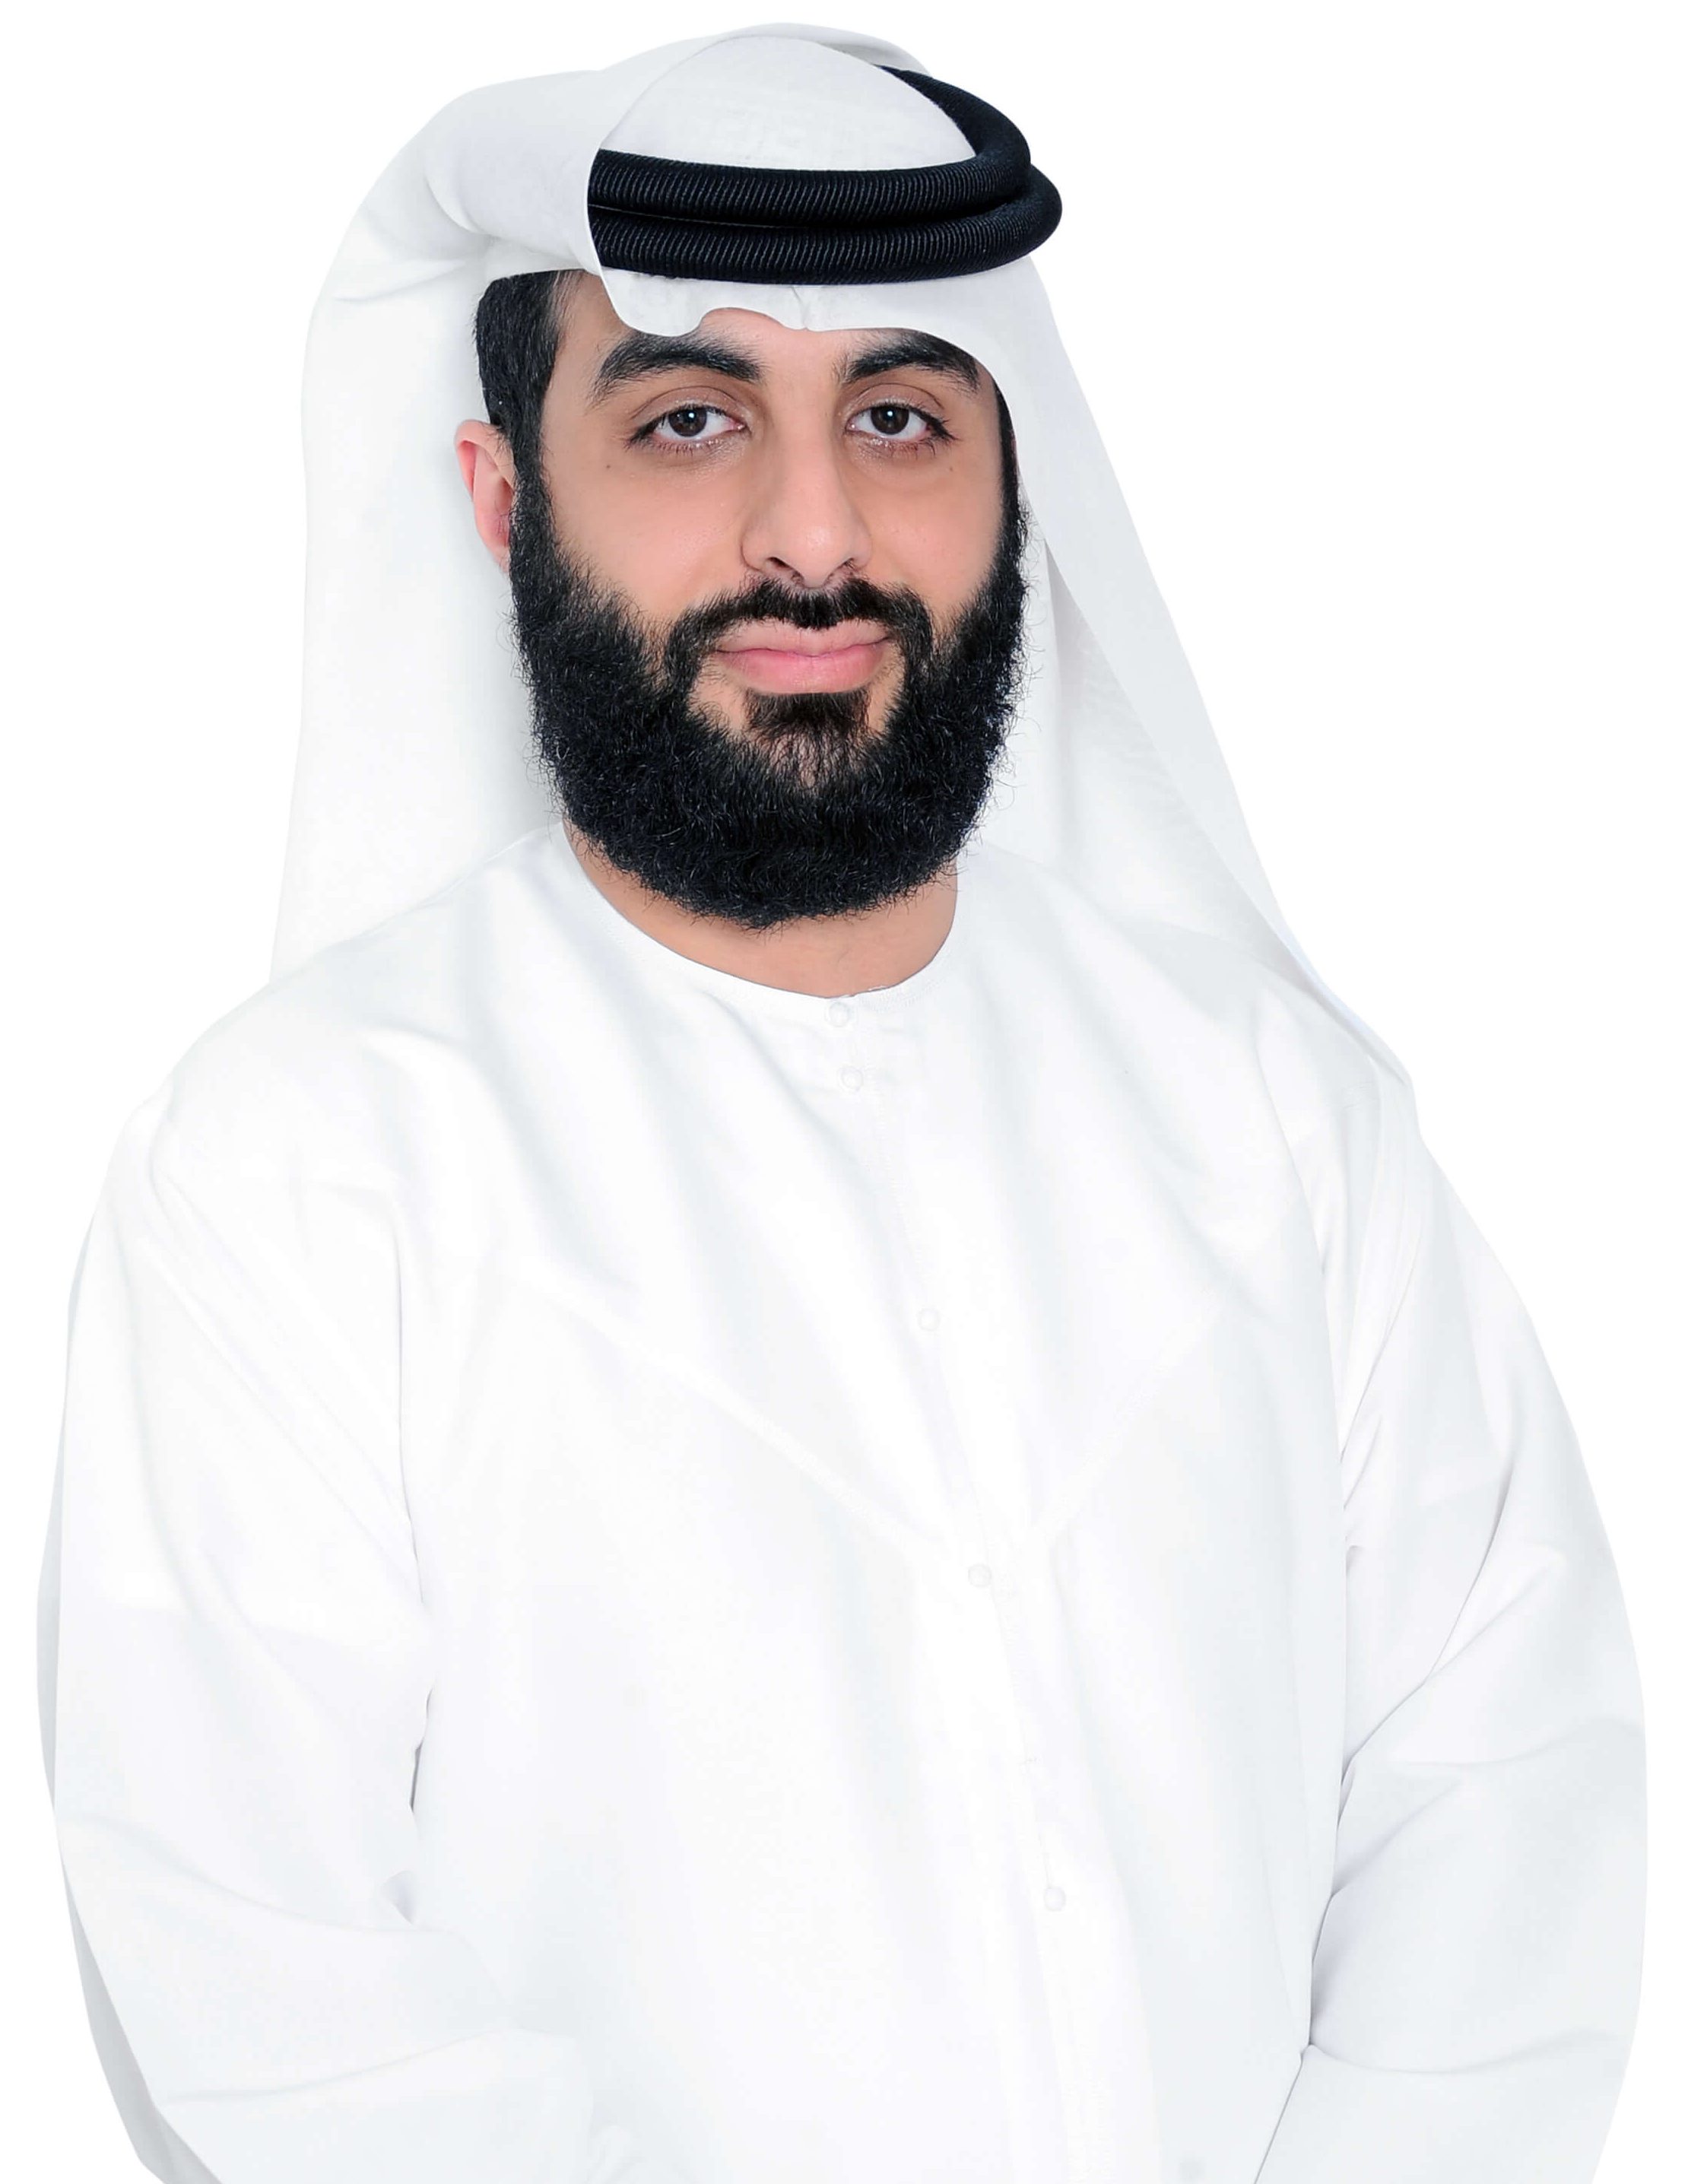 Dr. Khalid AlZarooni